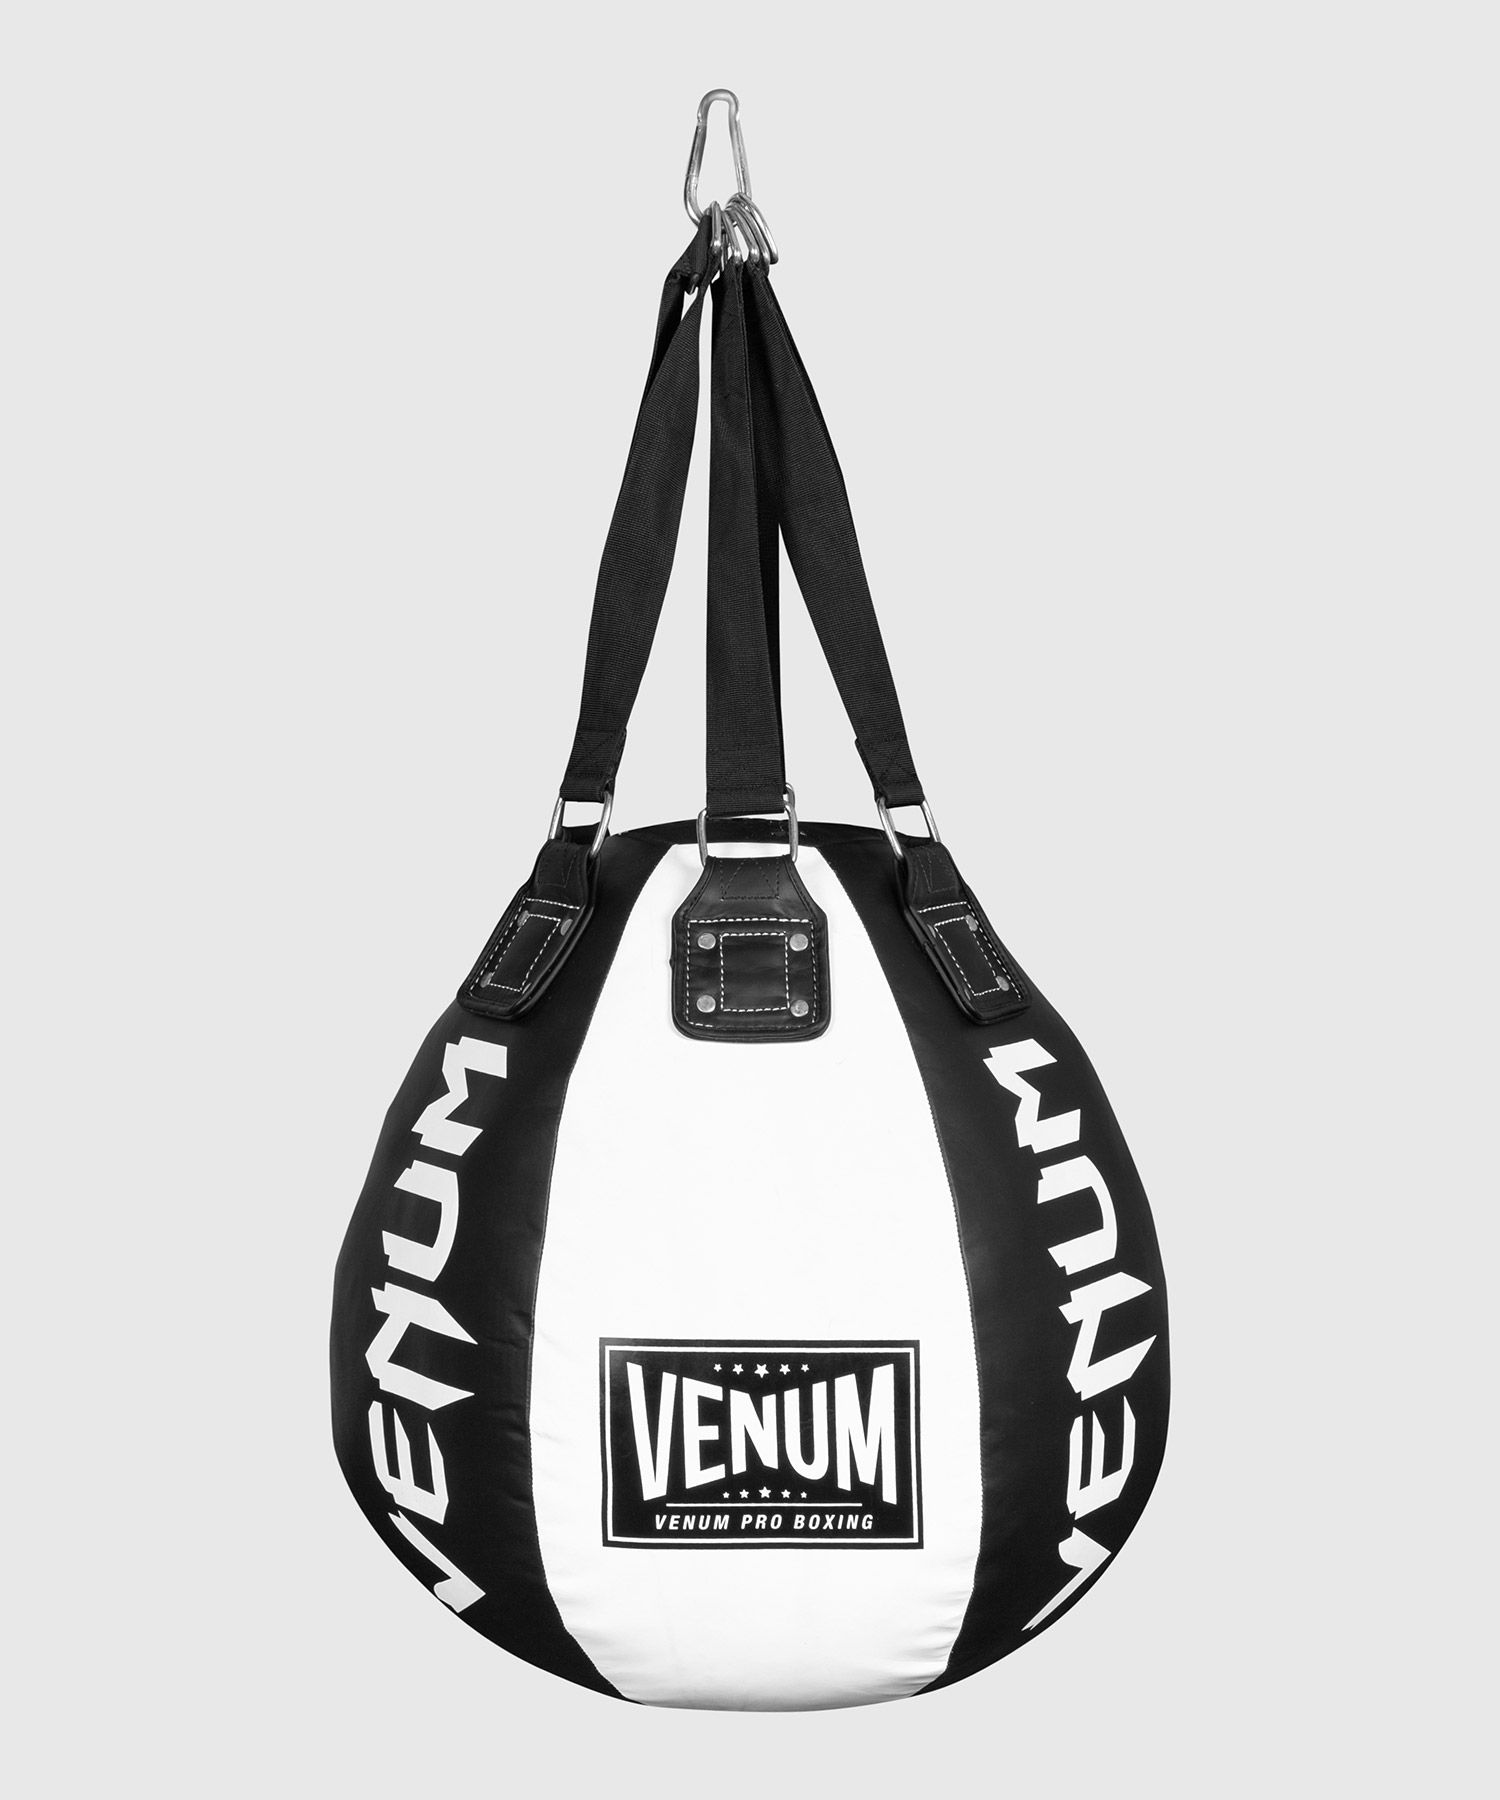 Venum Hurricane Big Ball punching bag